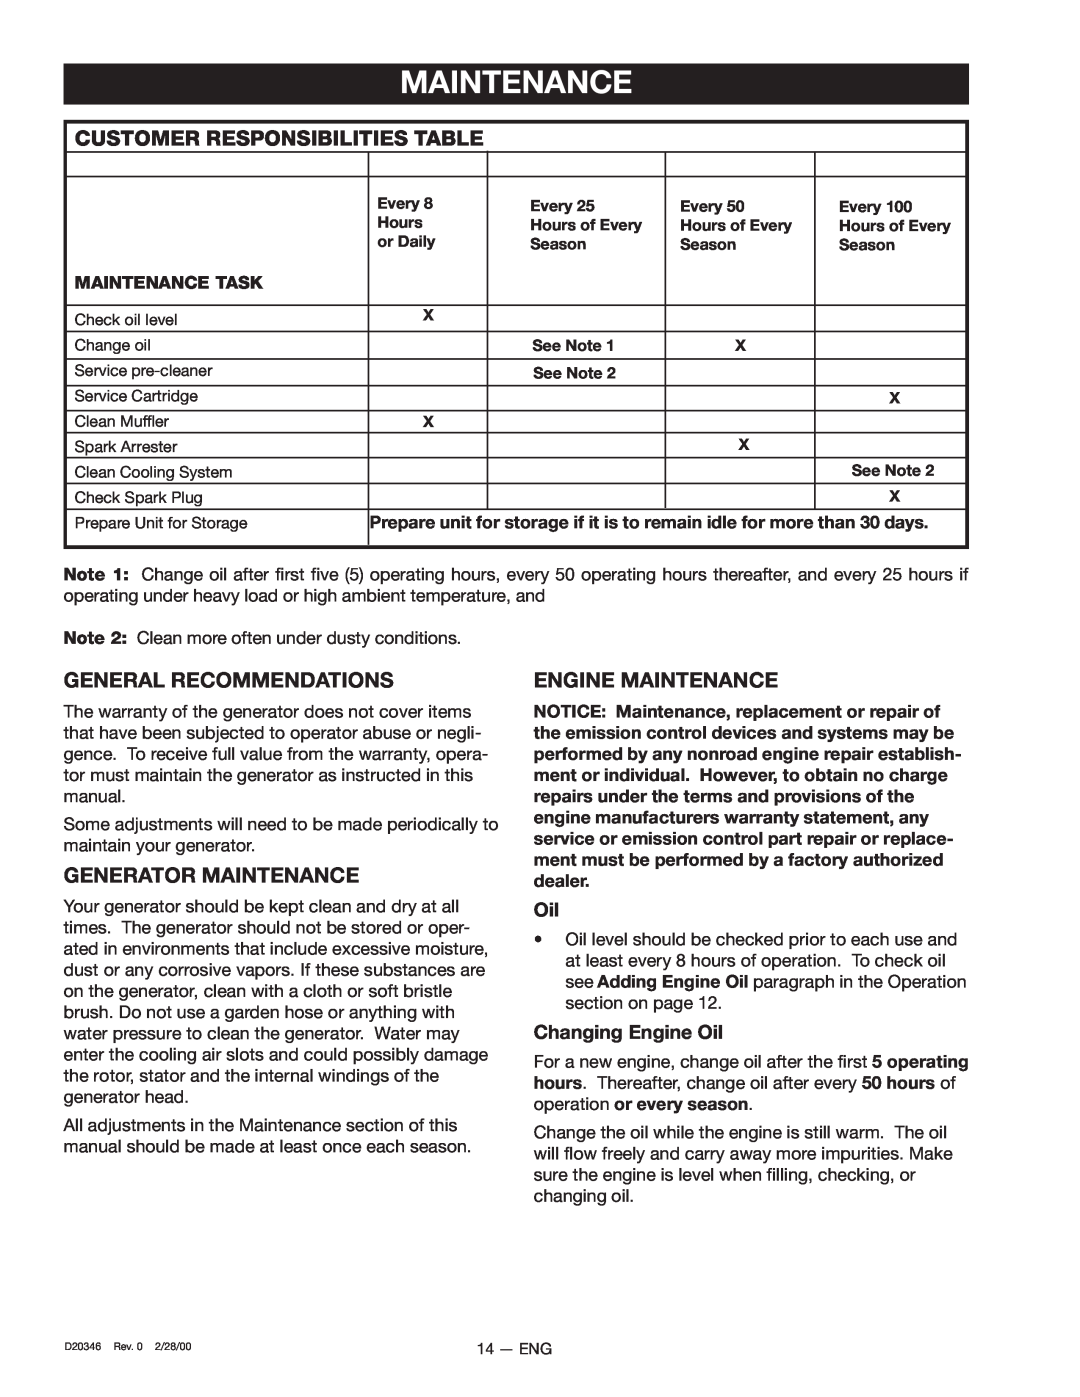 Craftsman 919.670031 Customer Responsibilities Table, General Recommendations, Generator Maintenance, Maintenance Task 